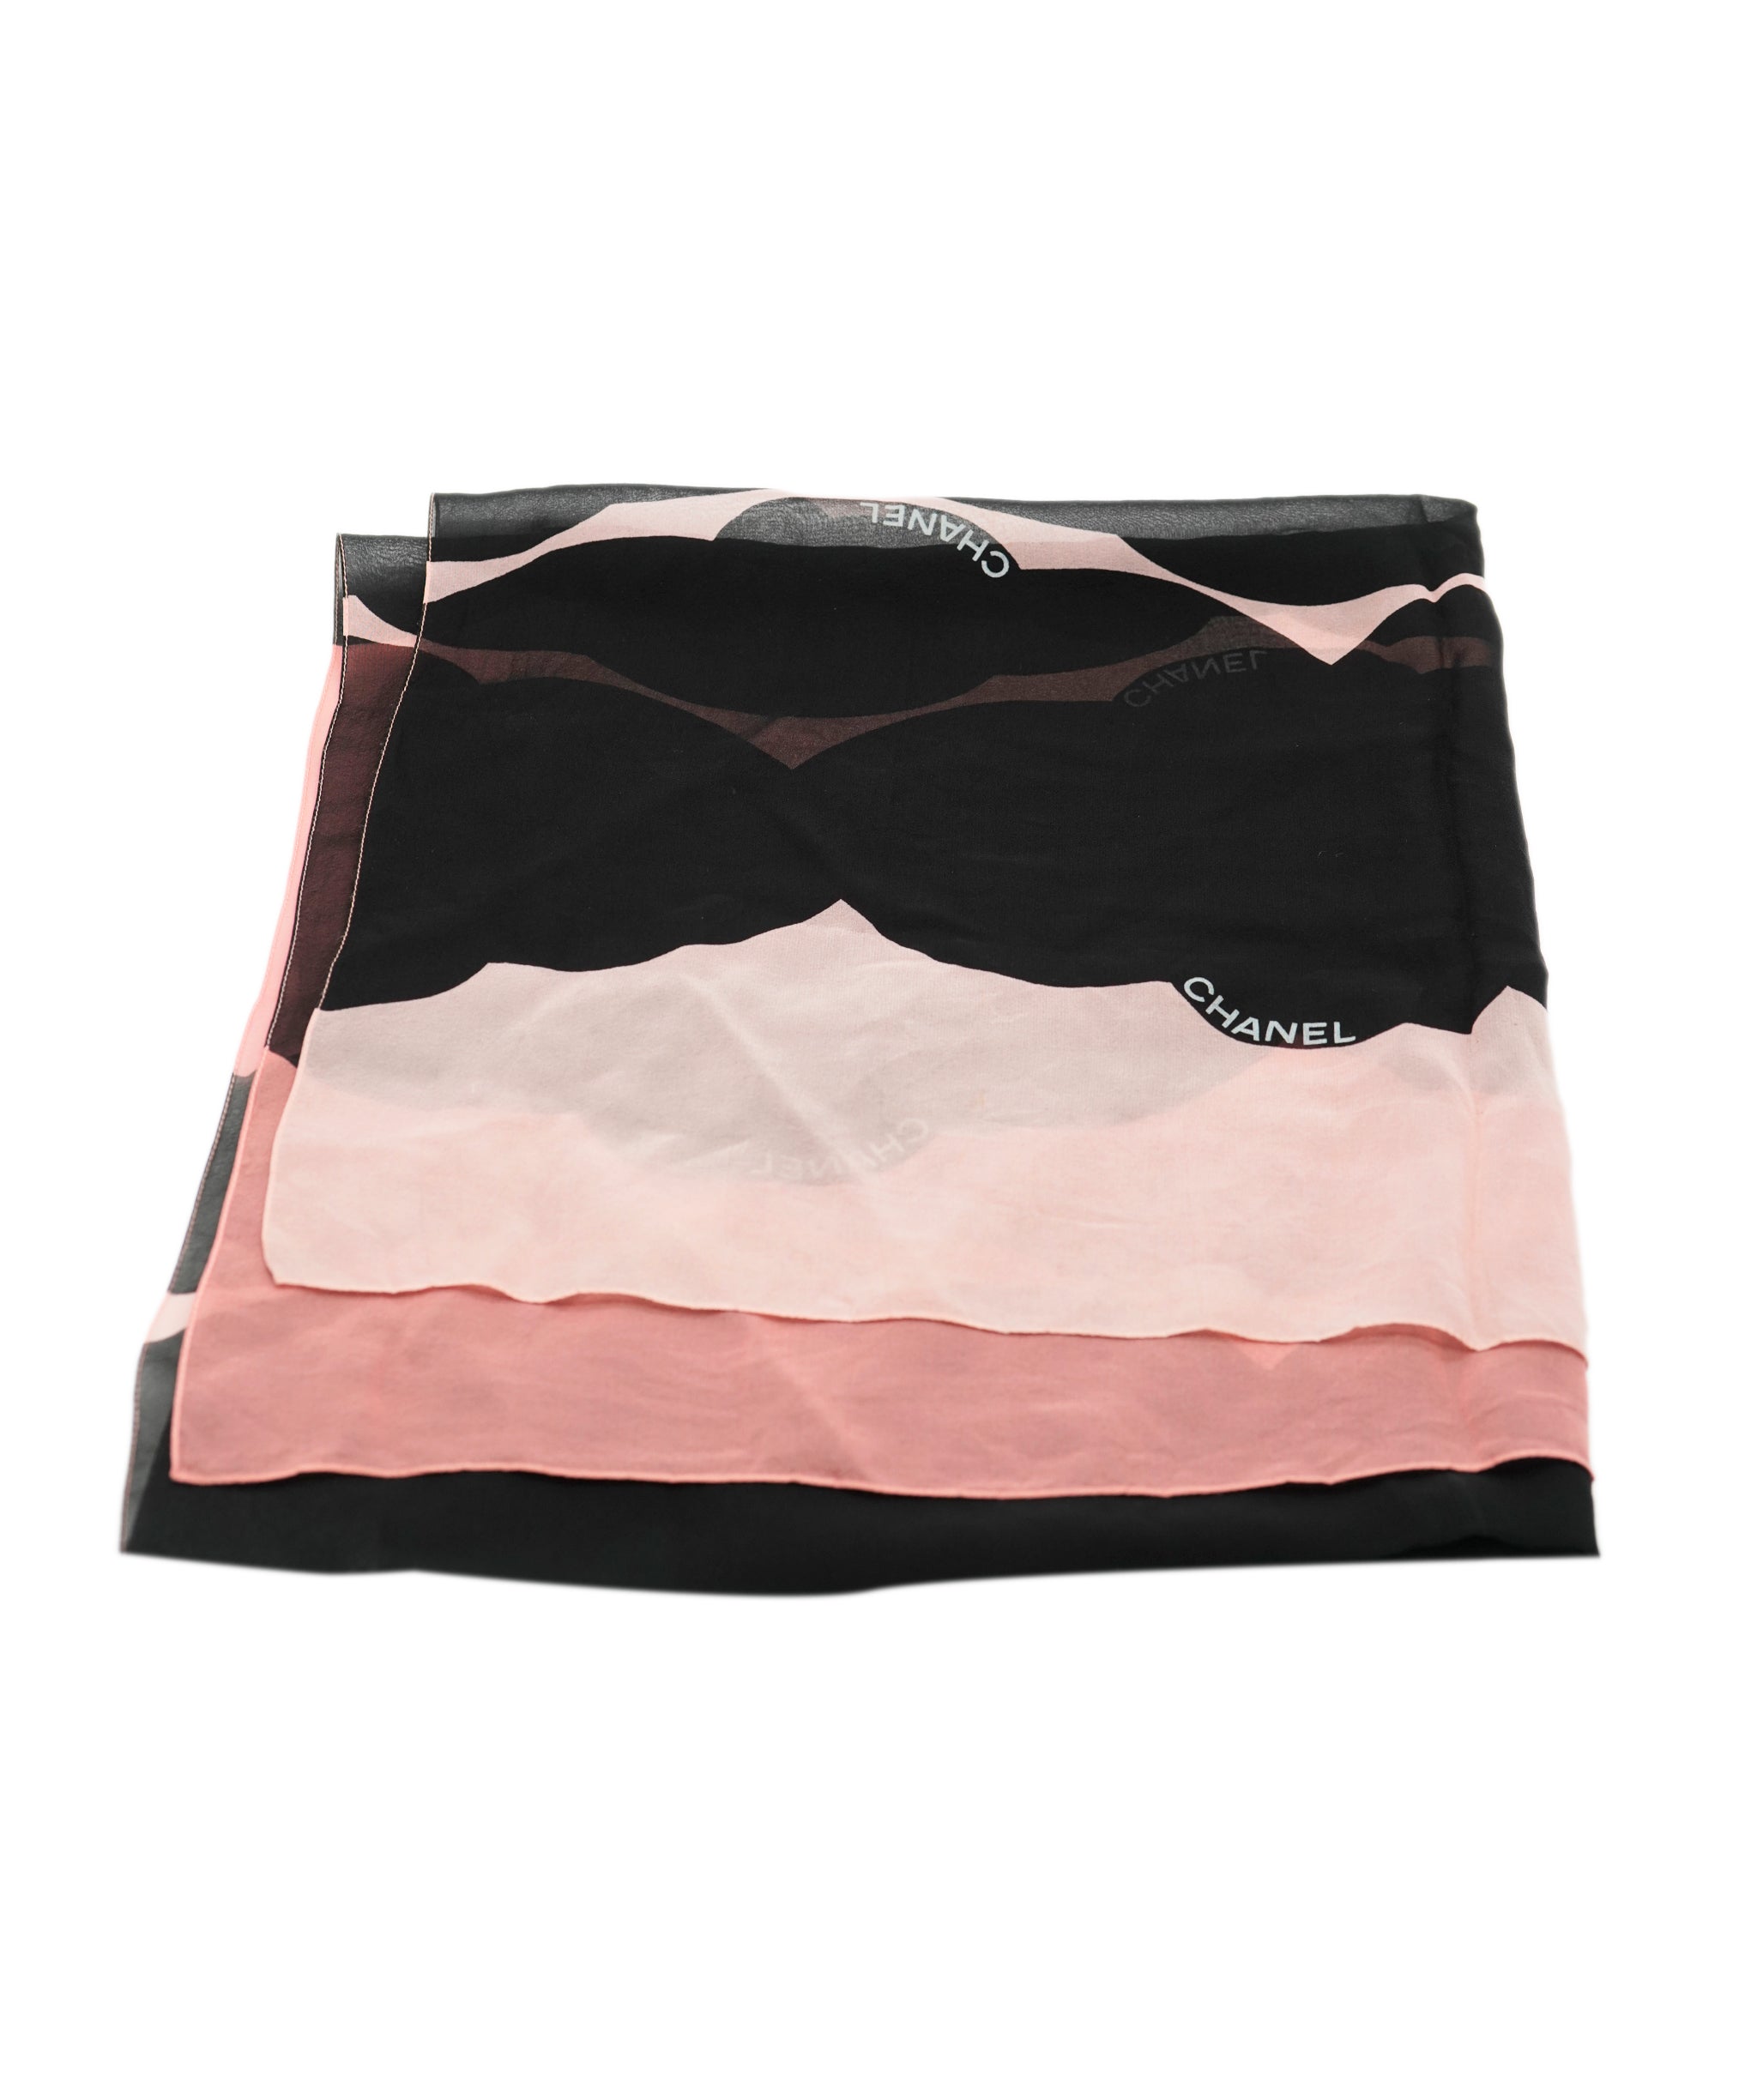 Chanel Chanel scarf, black, pink and corai, silk ASL10036